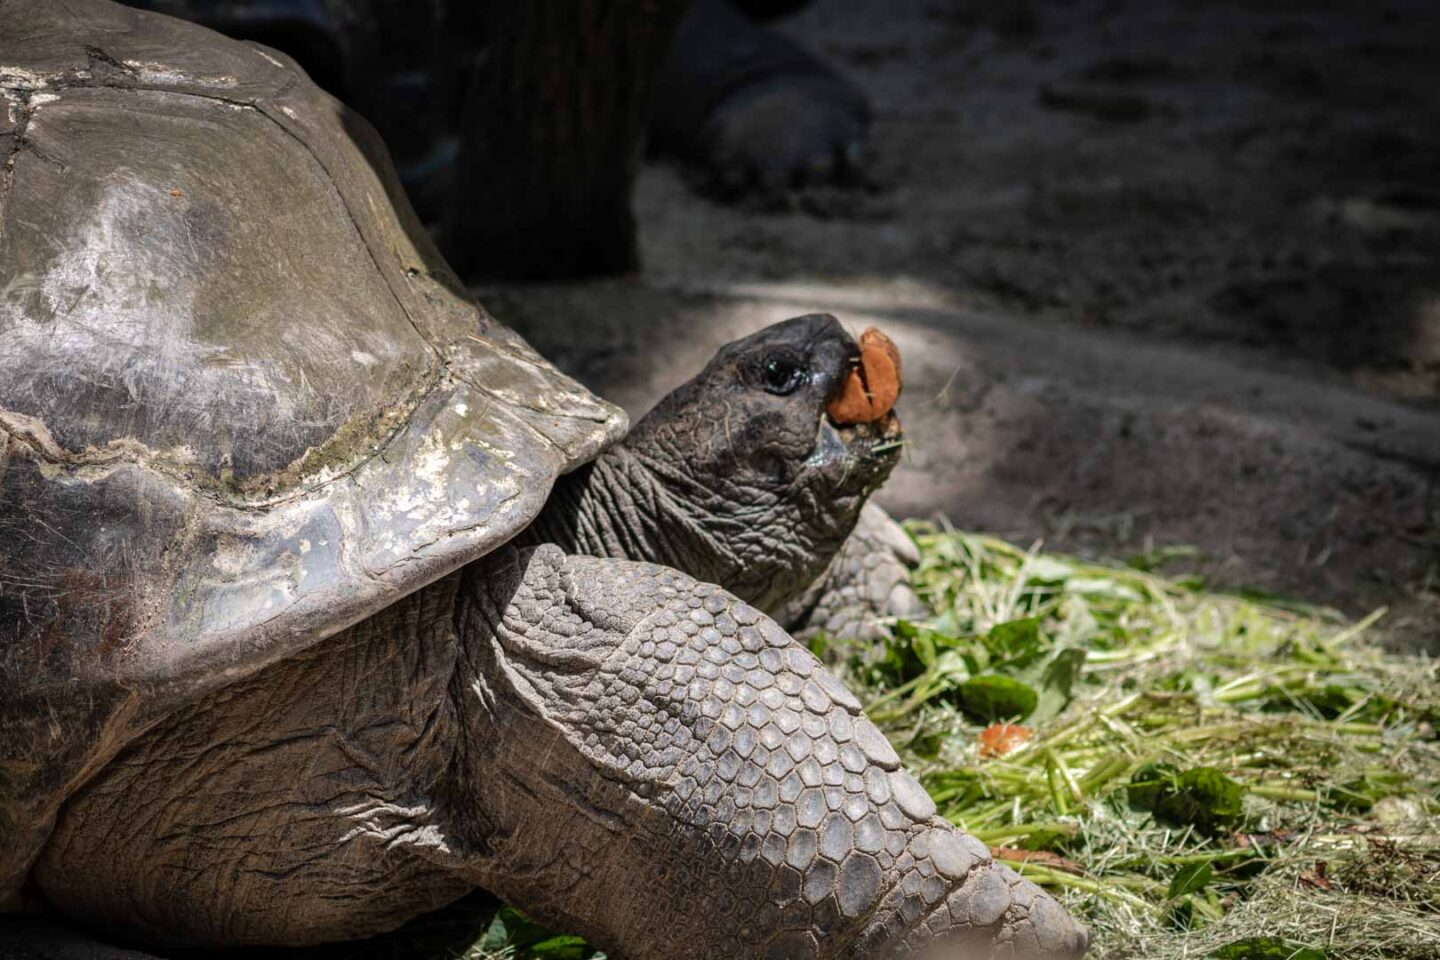 Giant tortoise feeding